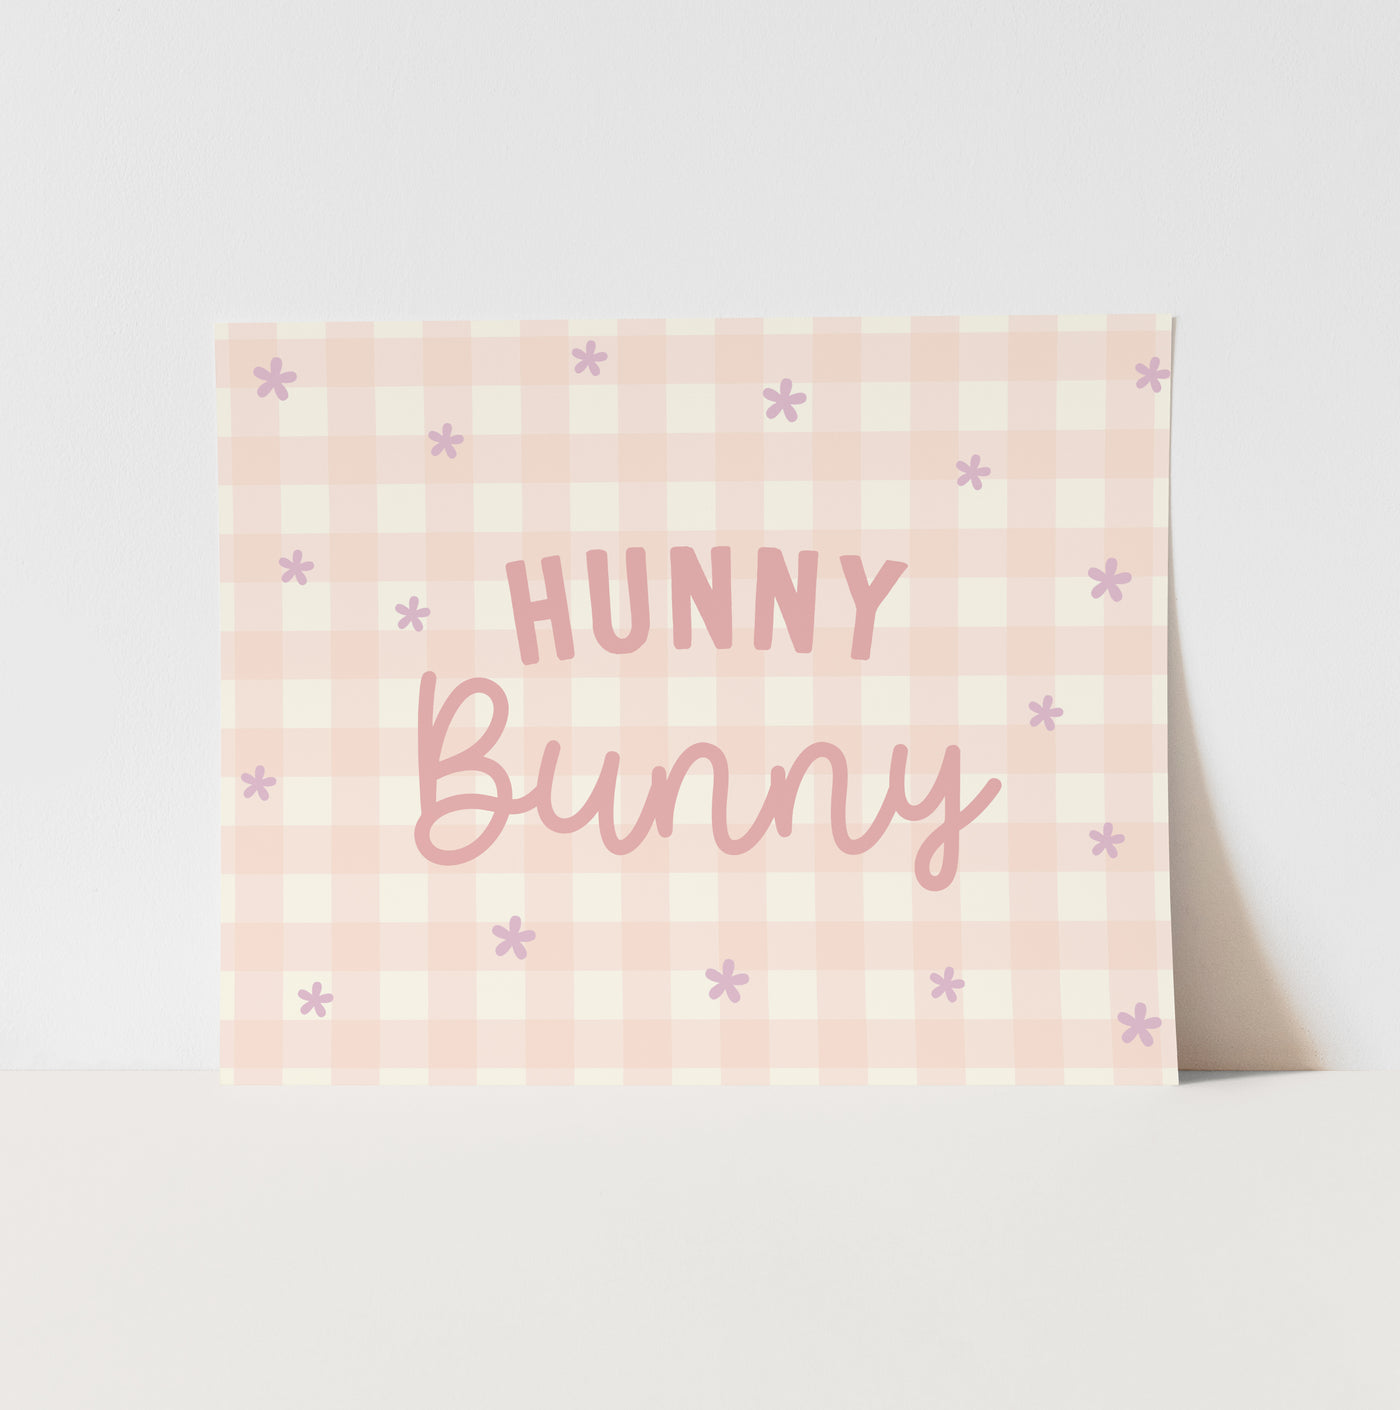 Art Print: Hunny Bunny